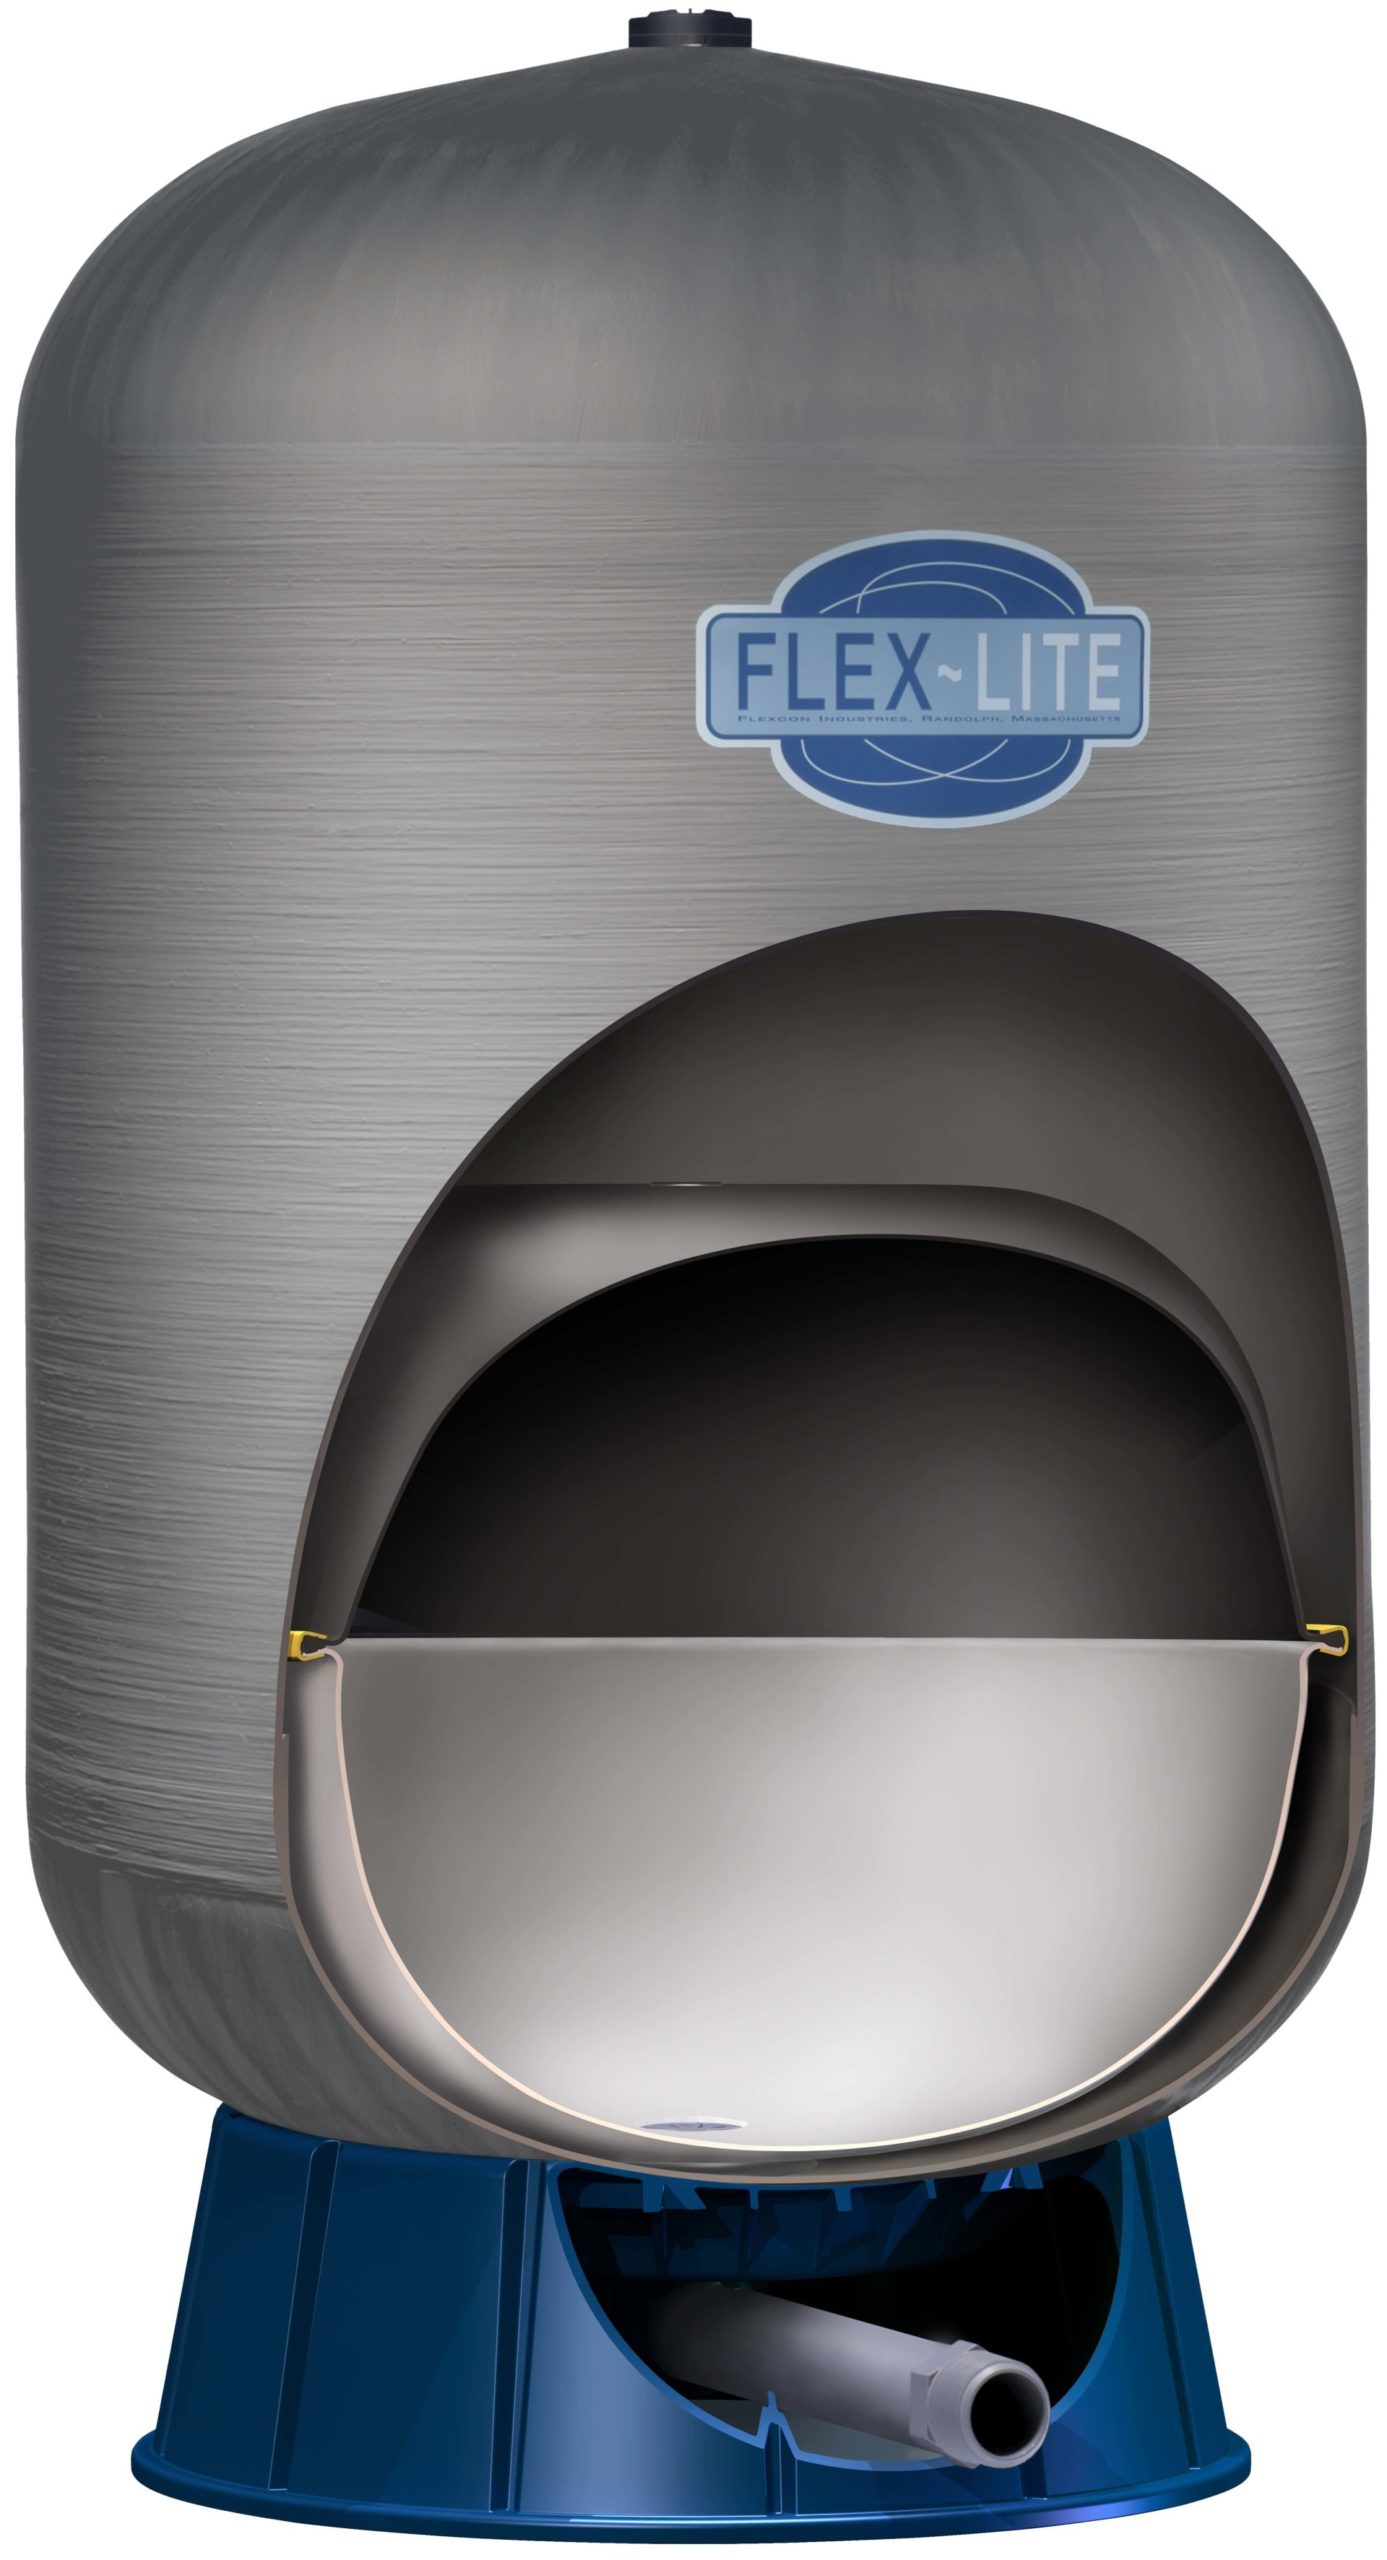 Flexlite Water Pressure Tank